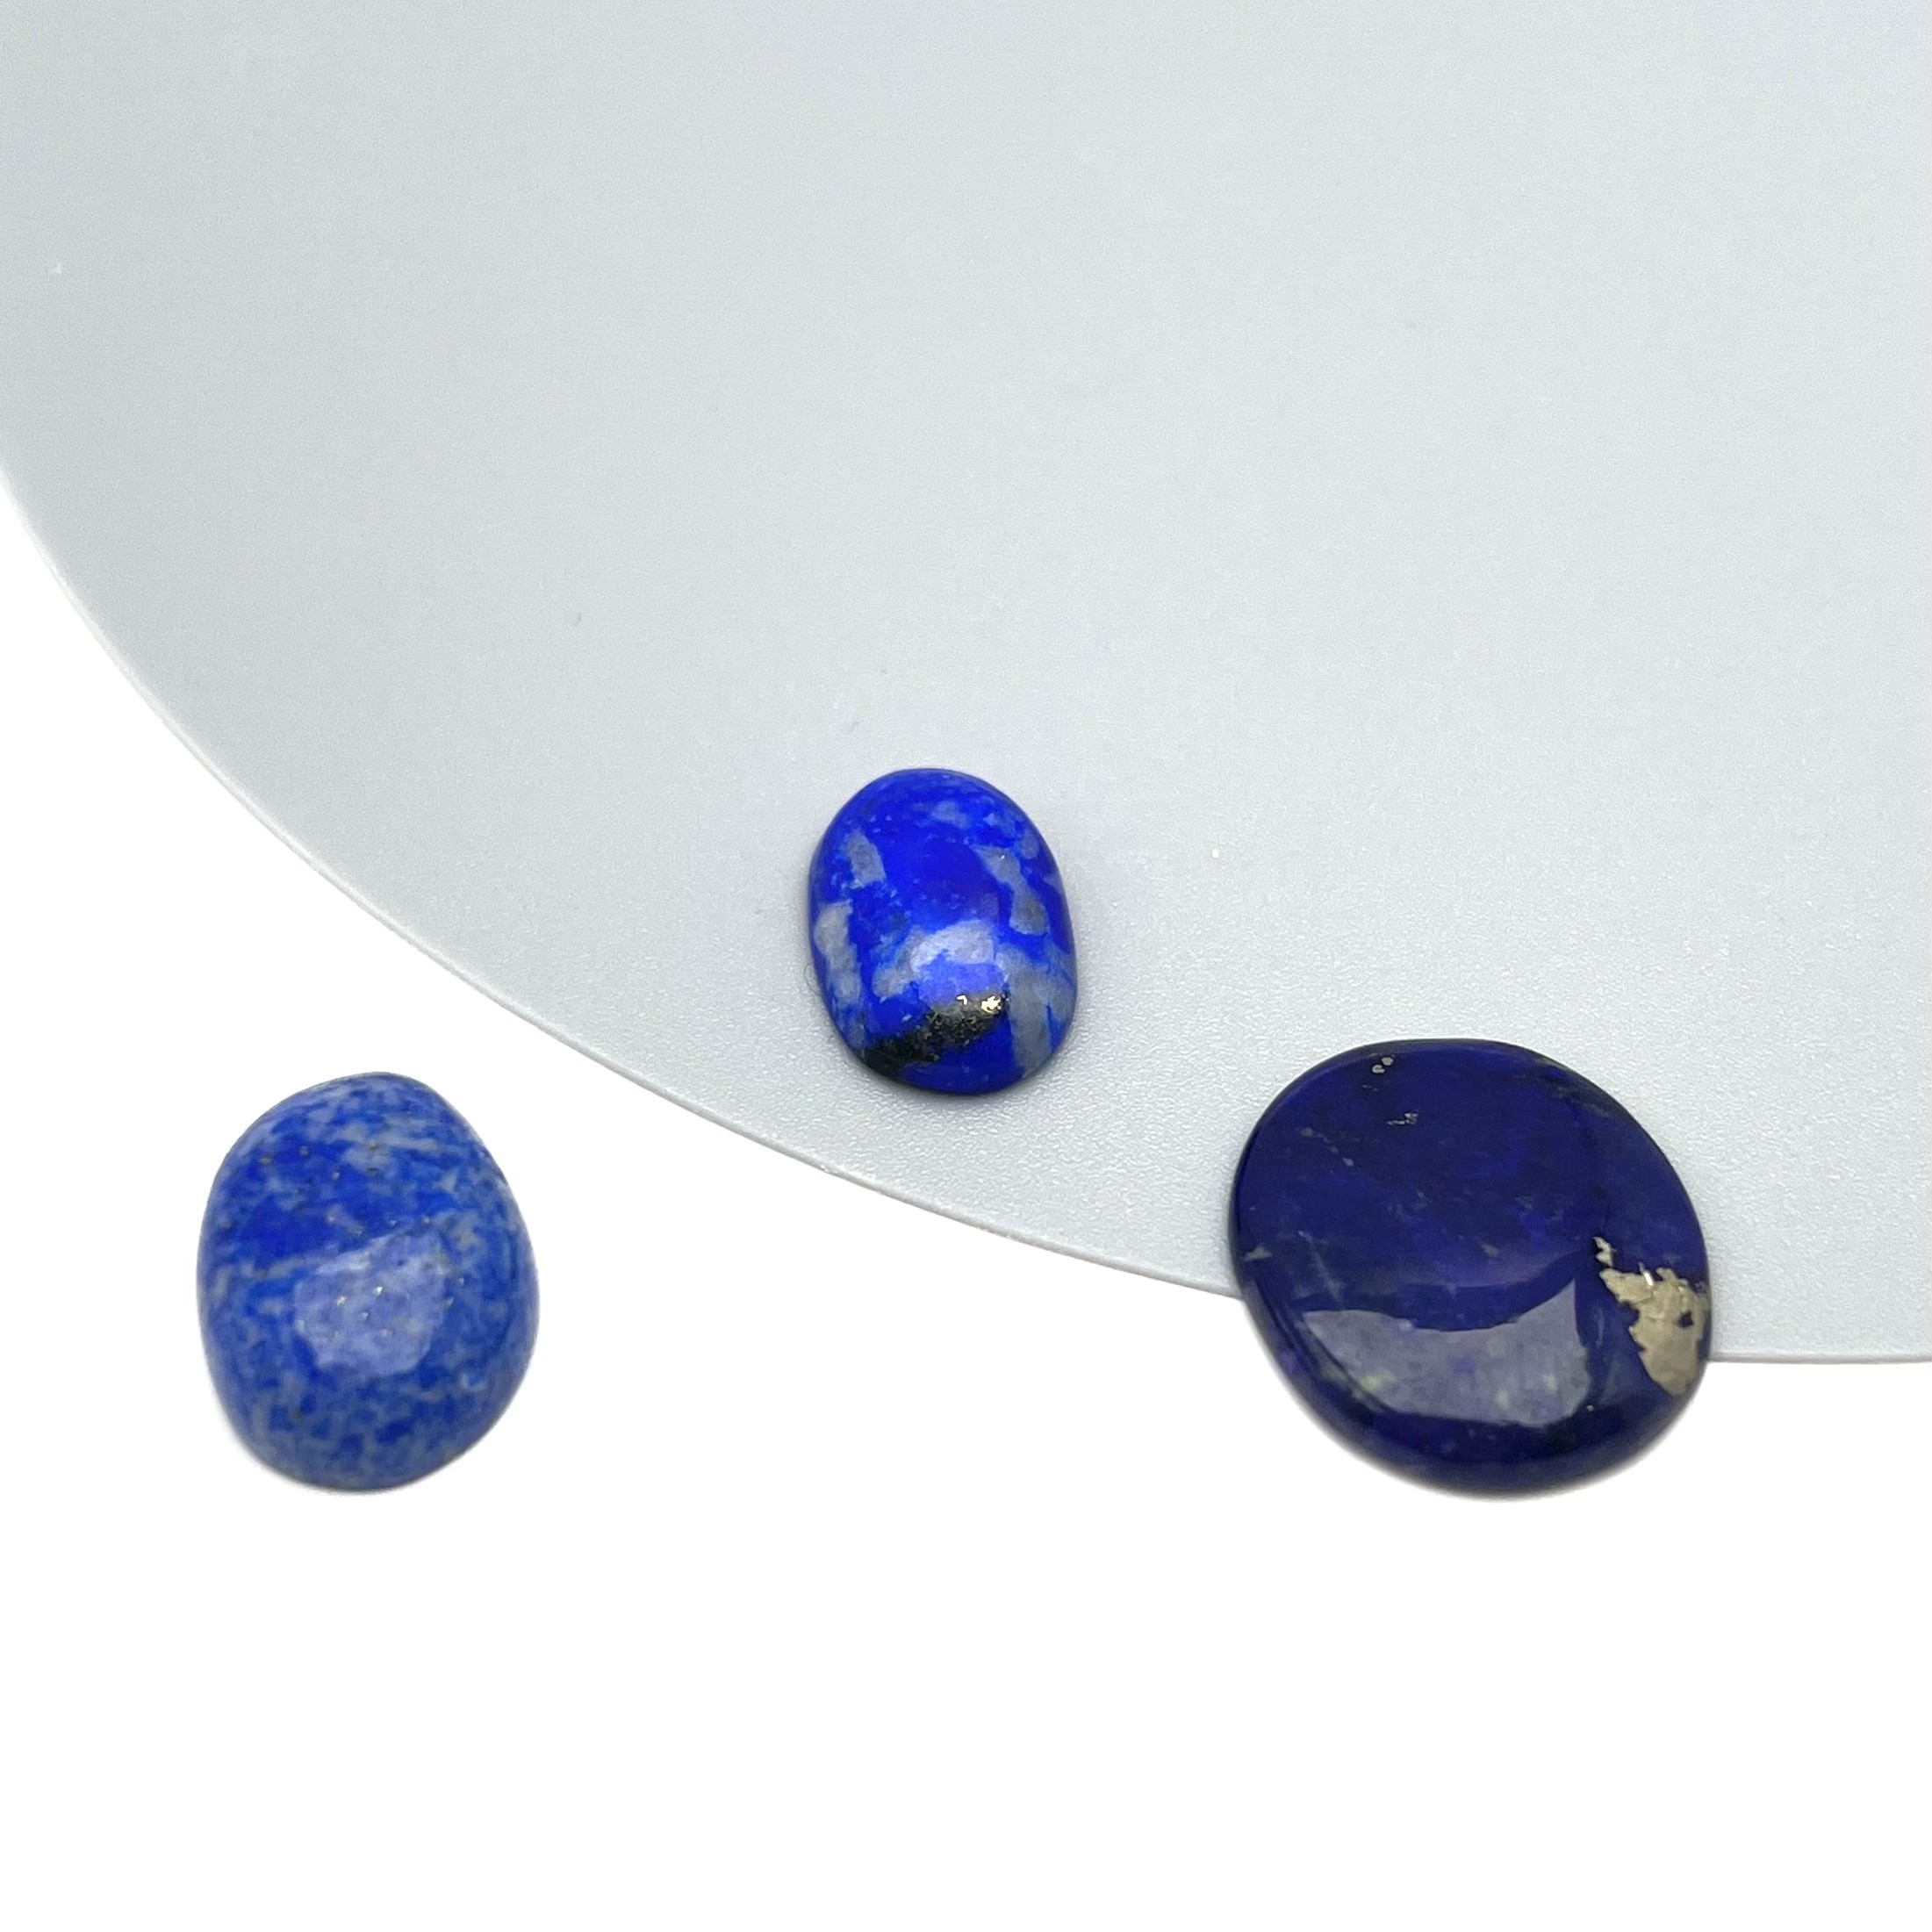 Three pieces of lapis lazuli, origin unknown